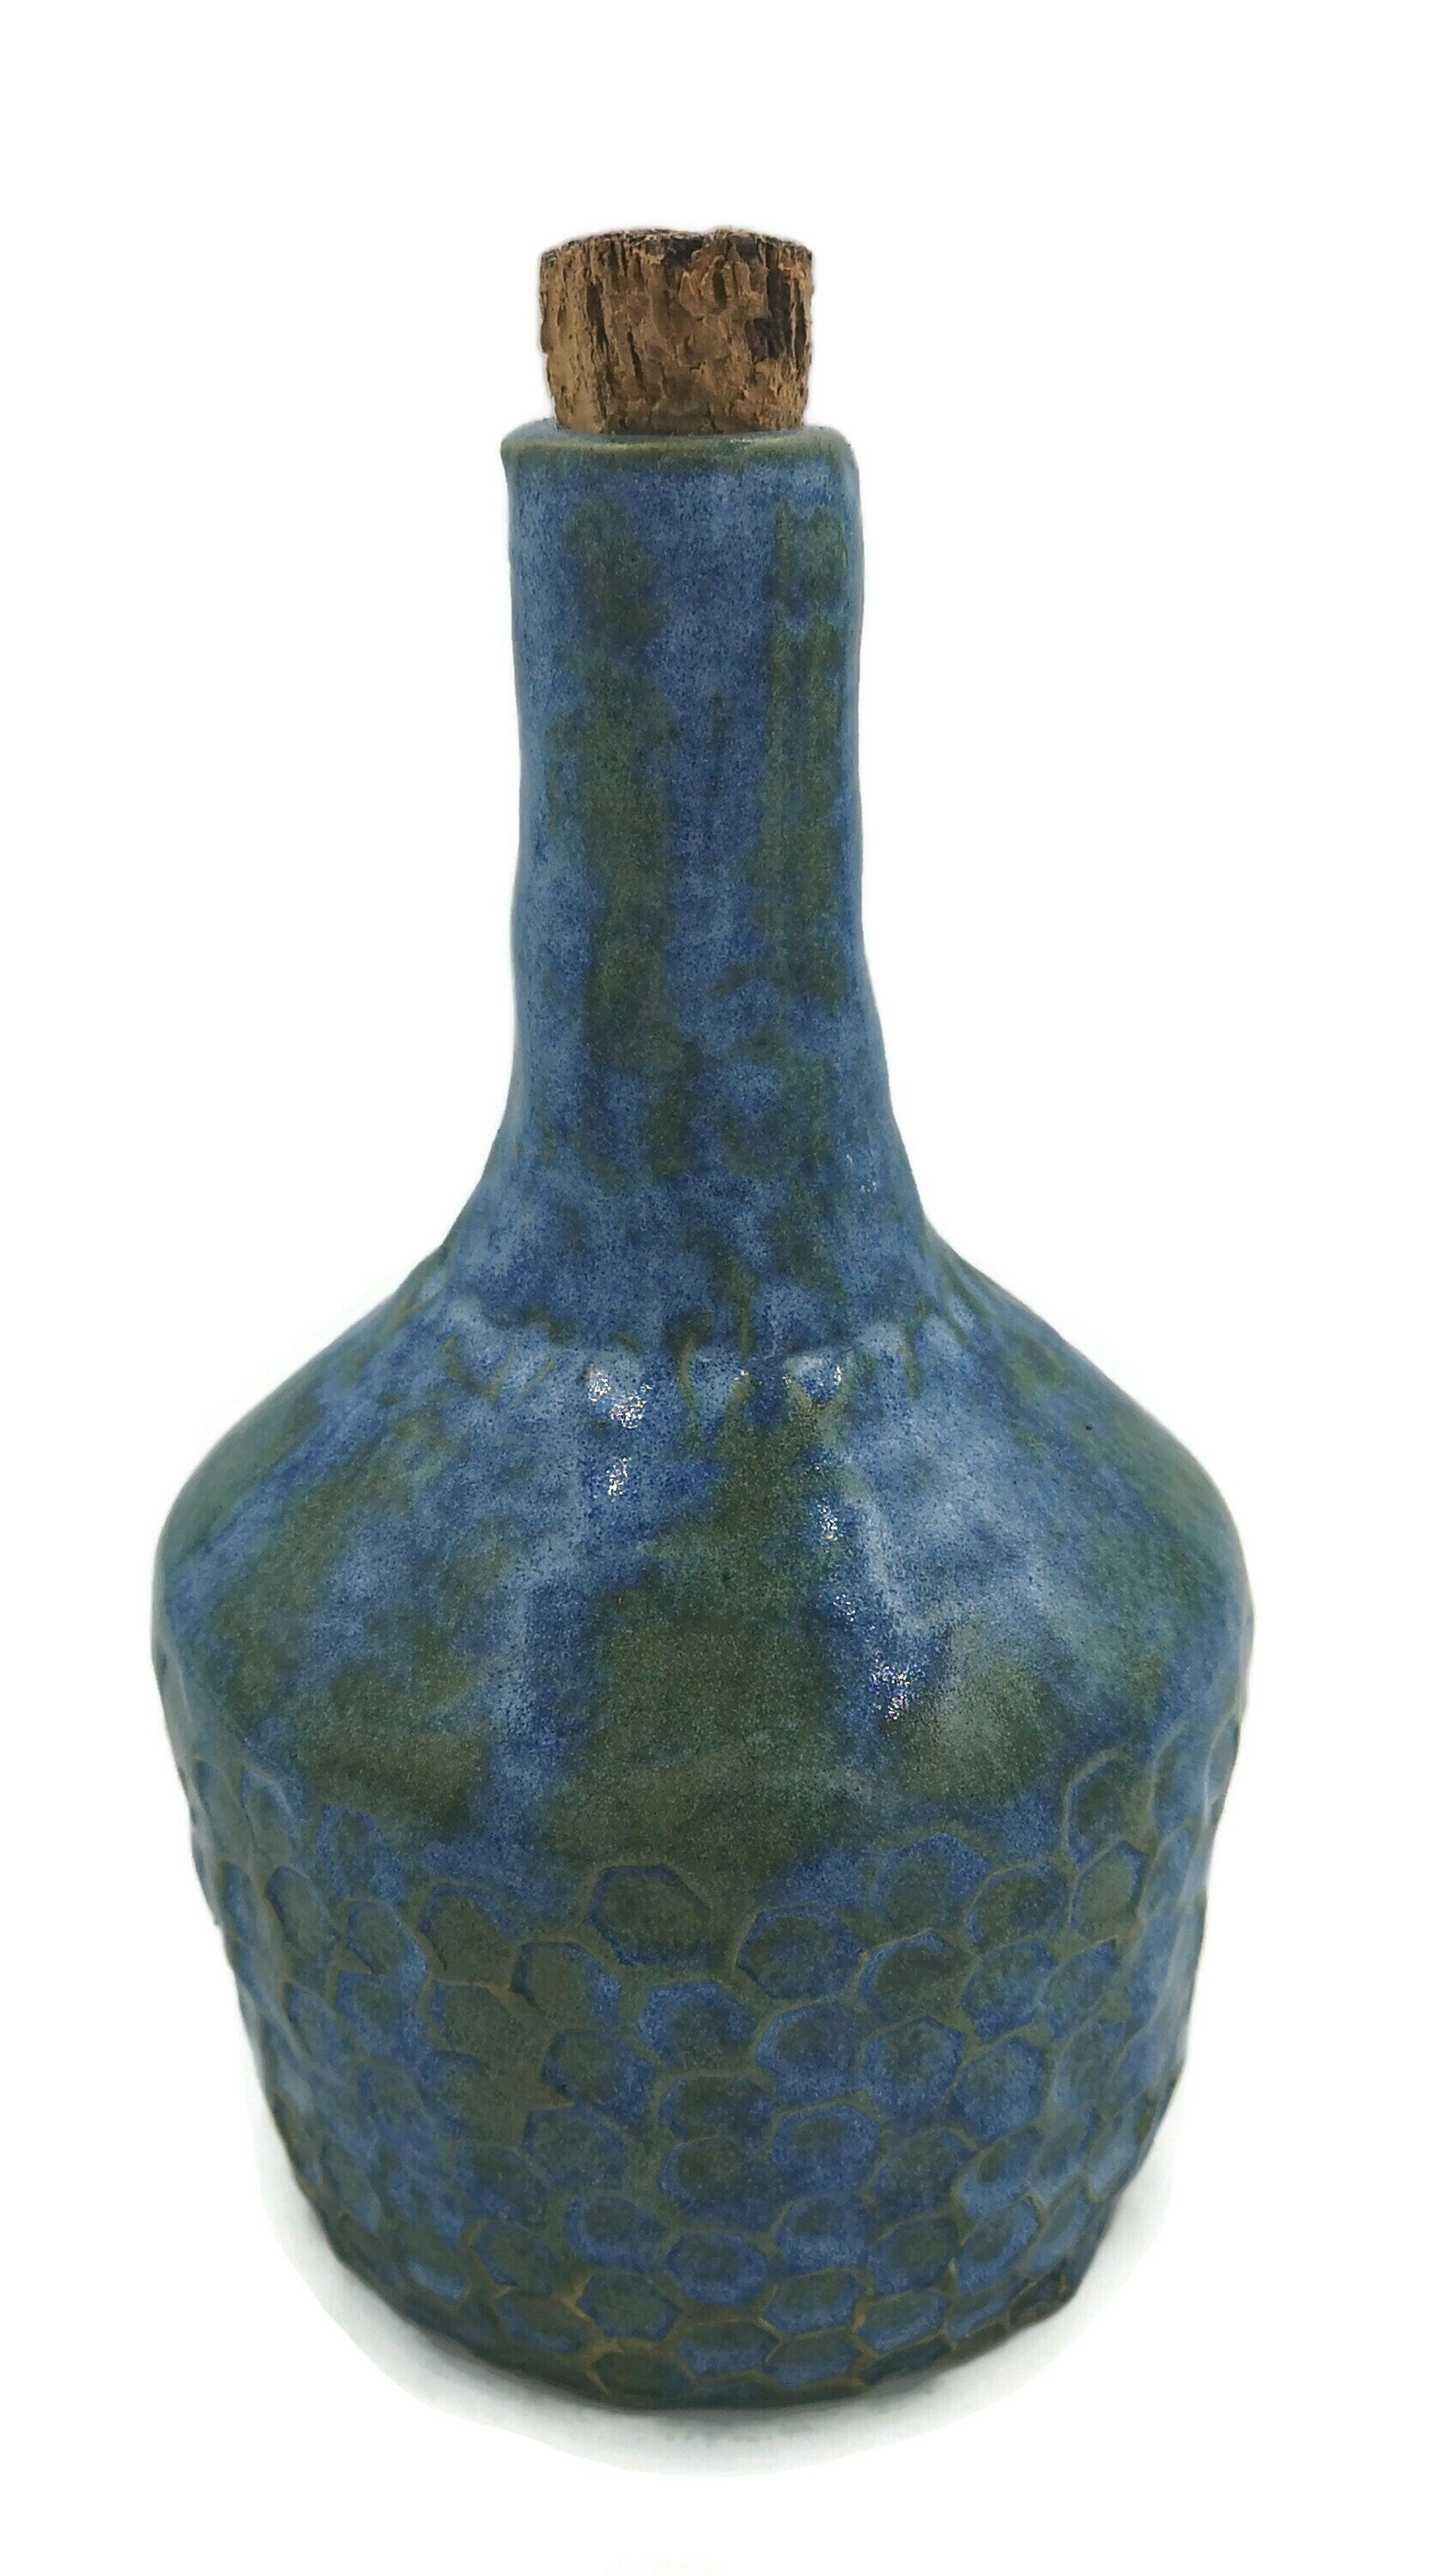 Blue Handmade Ceramic Bottle With Decorative Natural Cork Stopper, Sculptural Vase Honneycomb Texture For Rustic Home Decor - Ceramica Ana Rafael